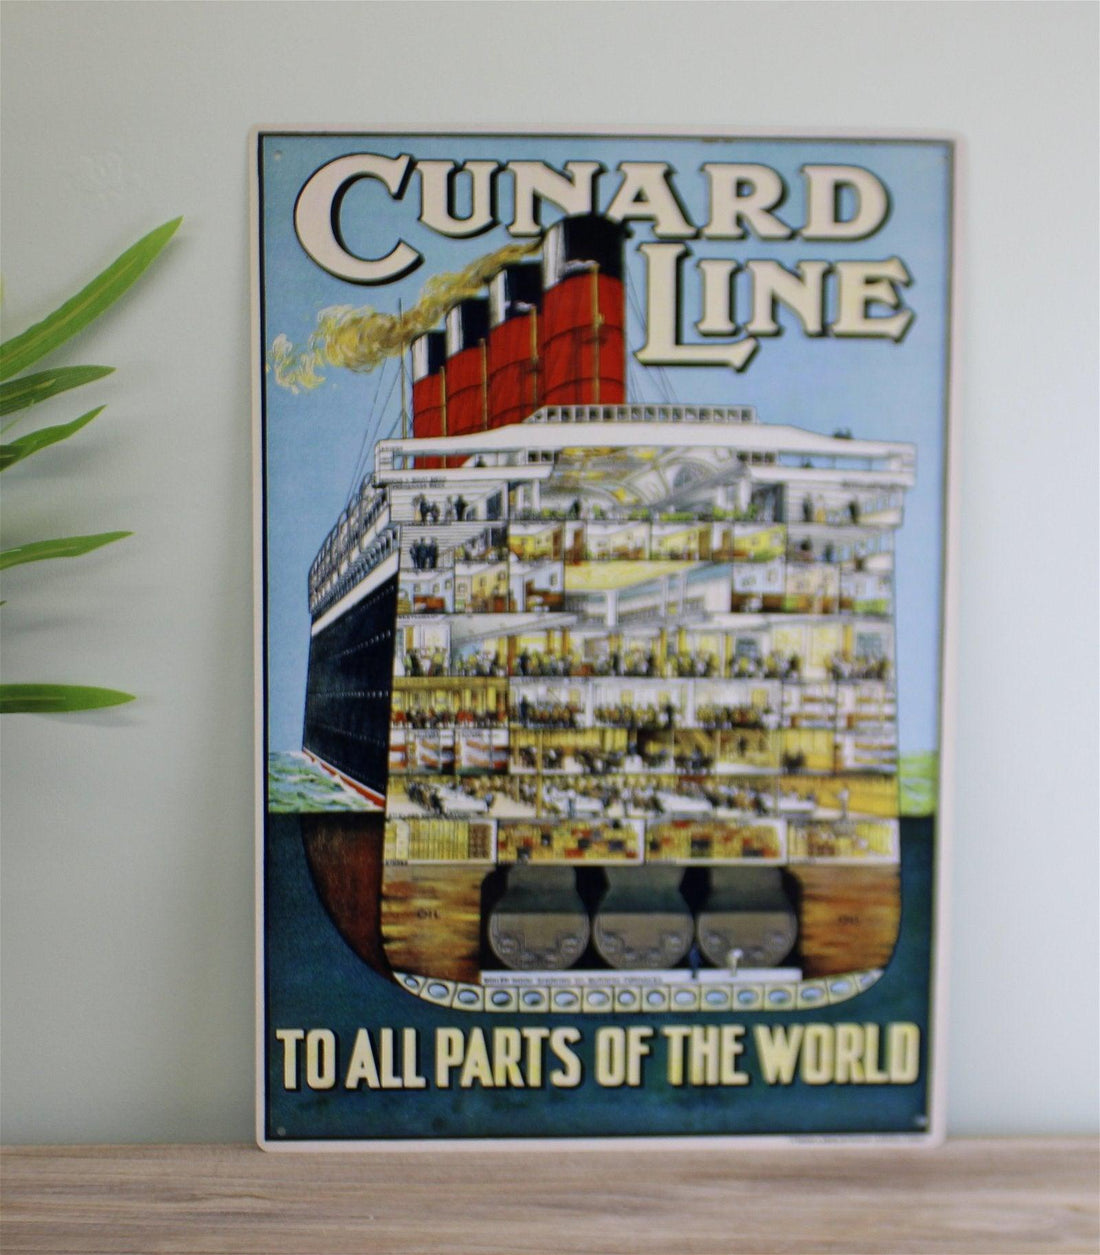 Vintage Metal Sign - Retro Advertising - Cunard Line - £27.99 - Retro Advertising 